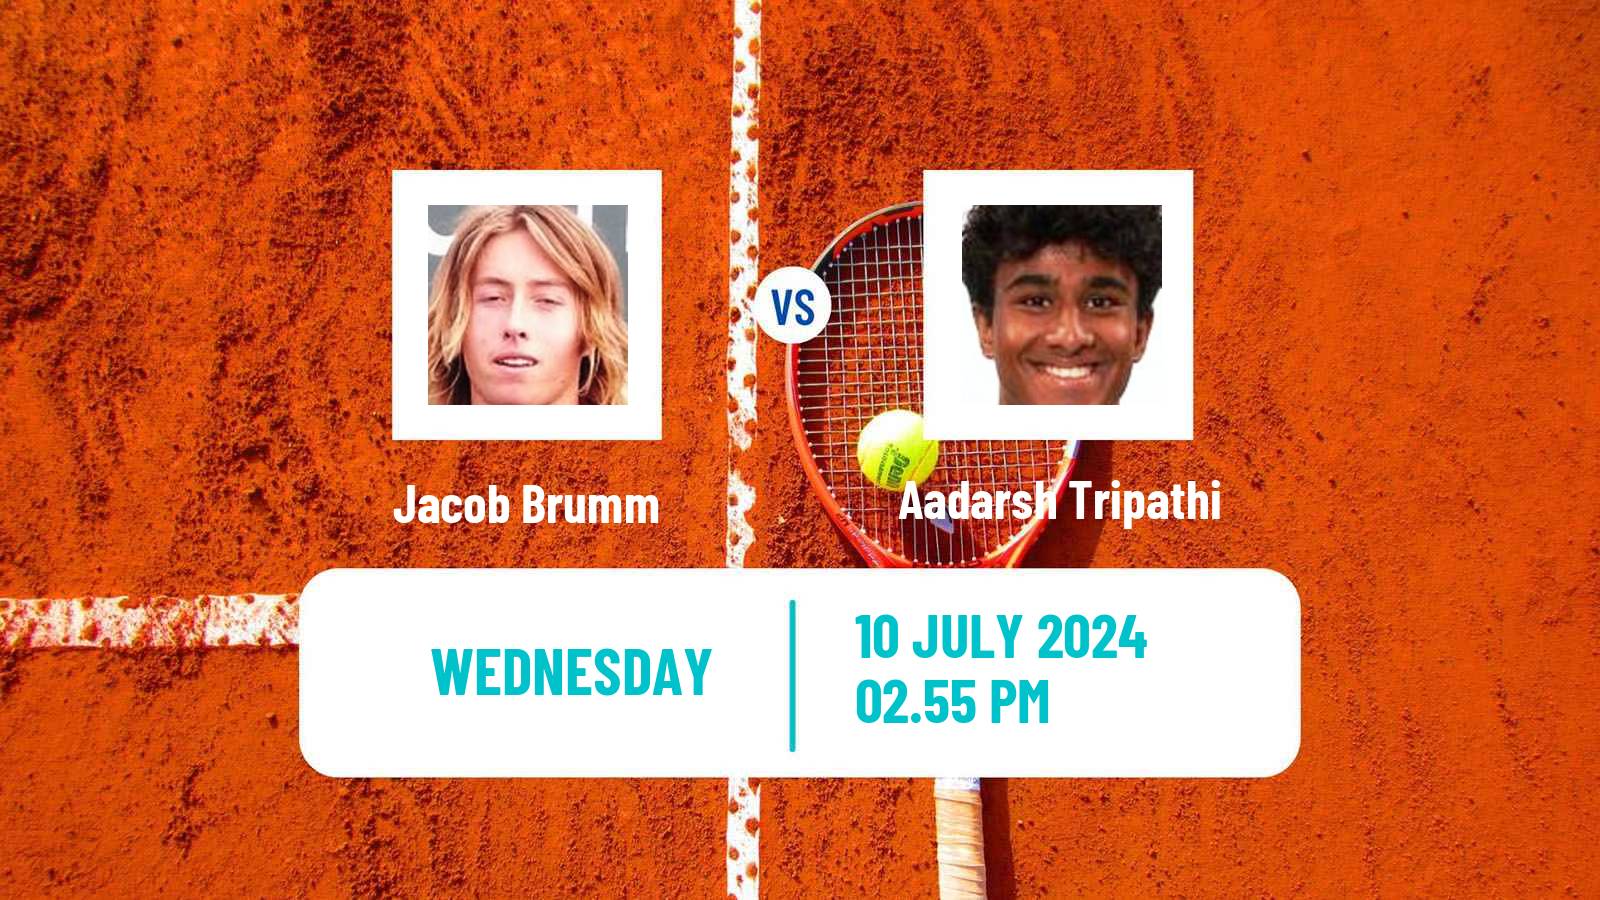 Tennis ITF M15 Lakewood Ca 2 Men Jacob Brumm - Aadarsh Tripathi